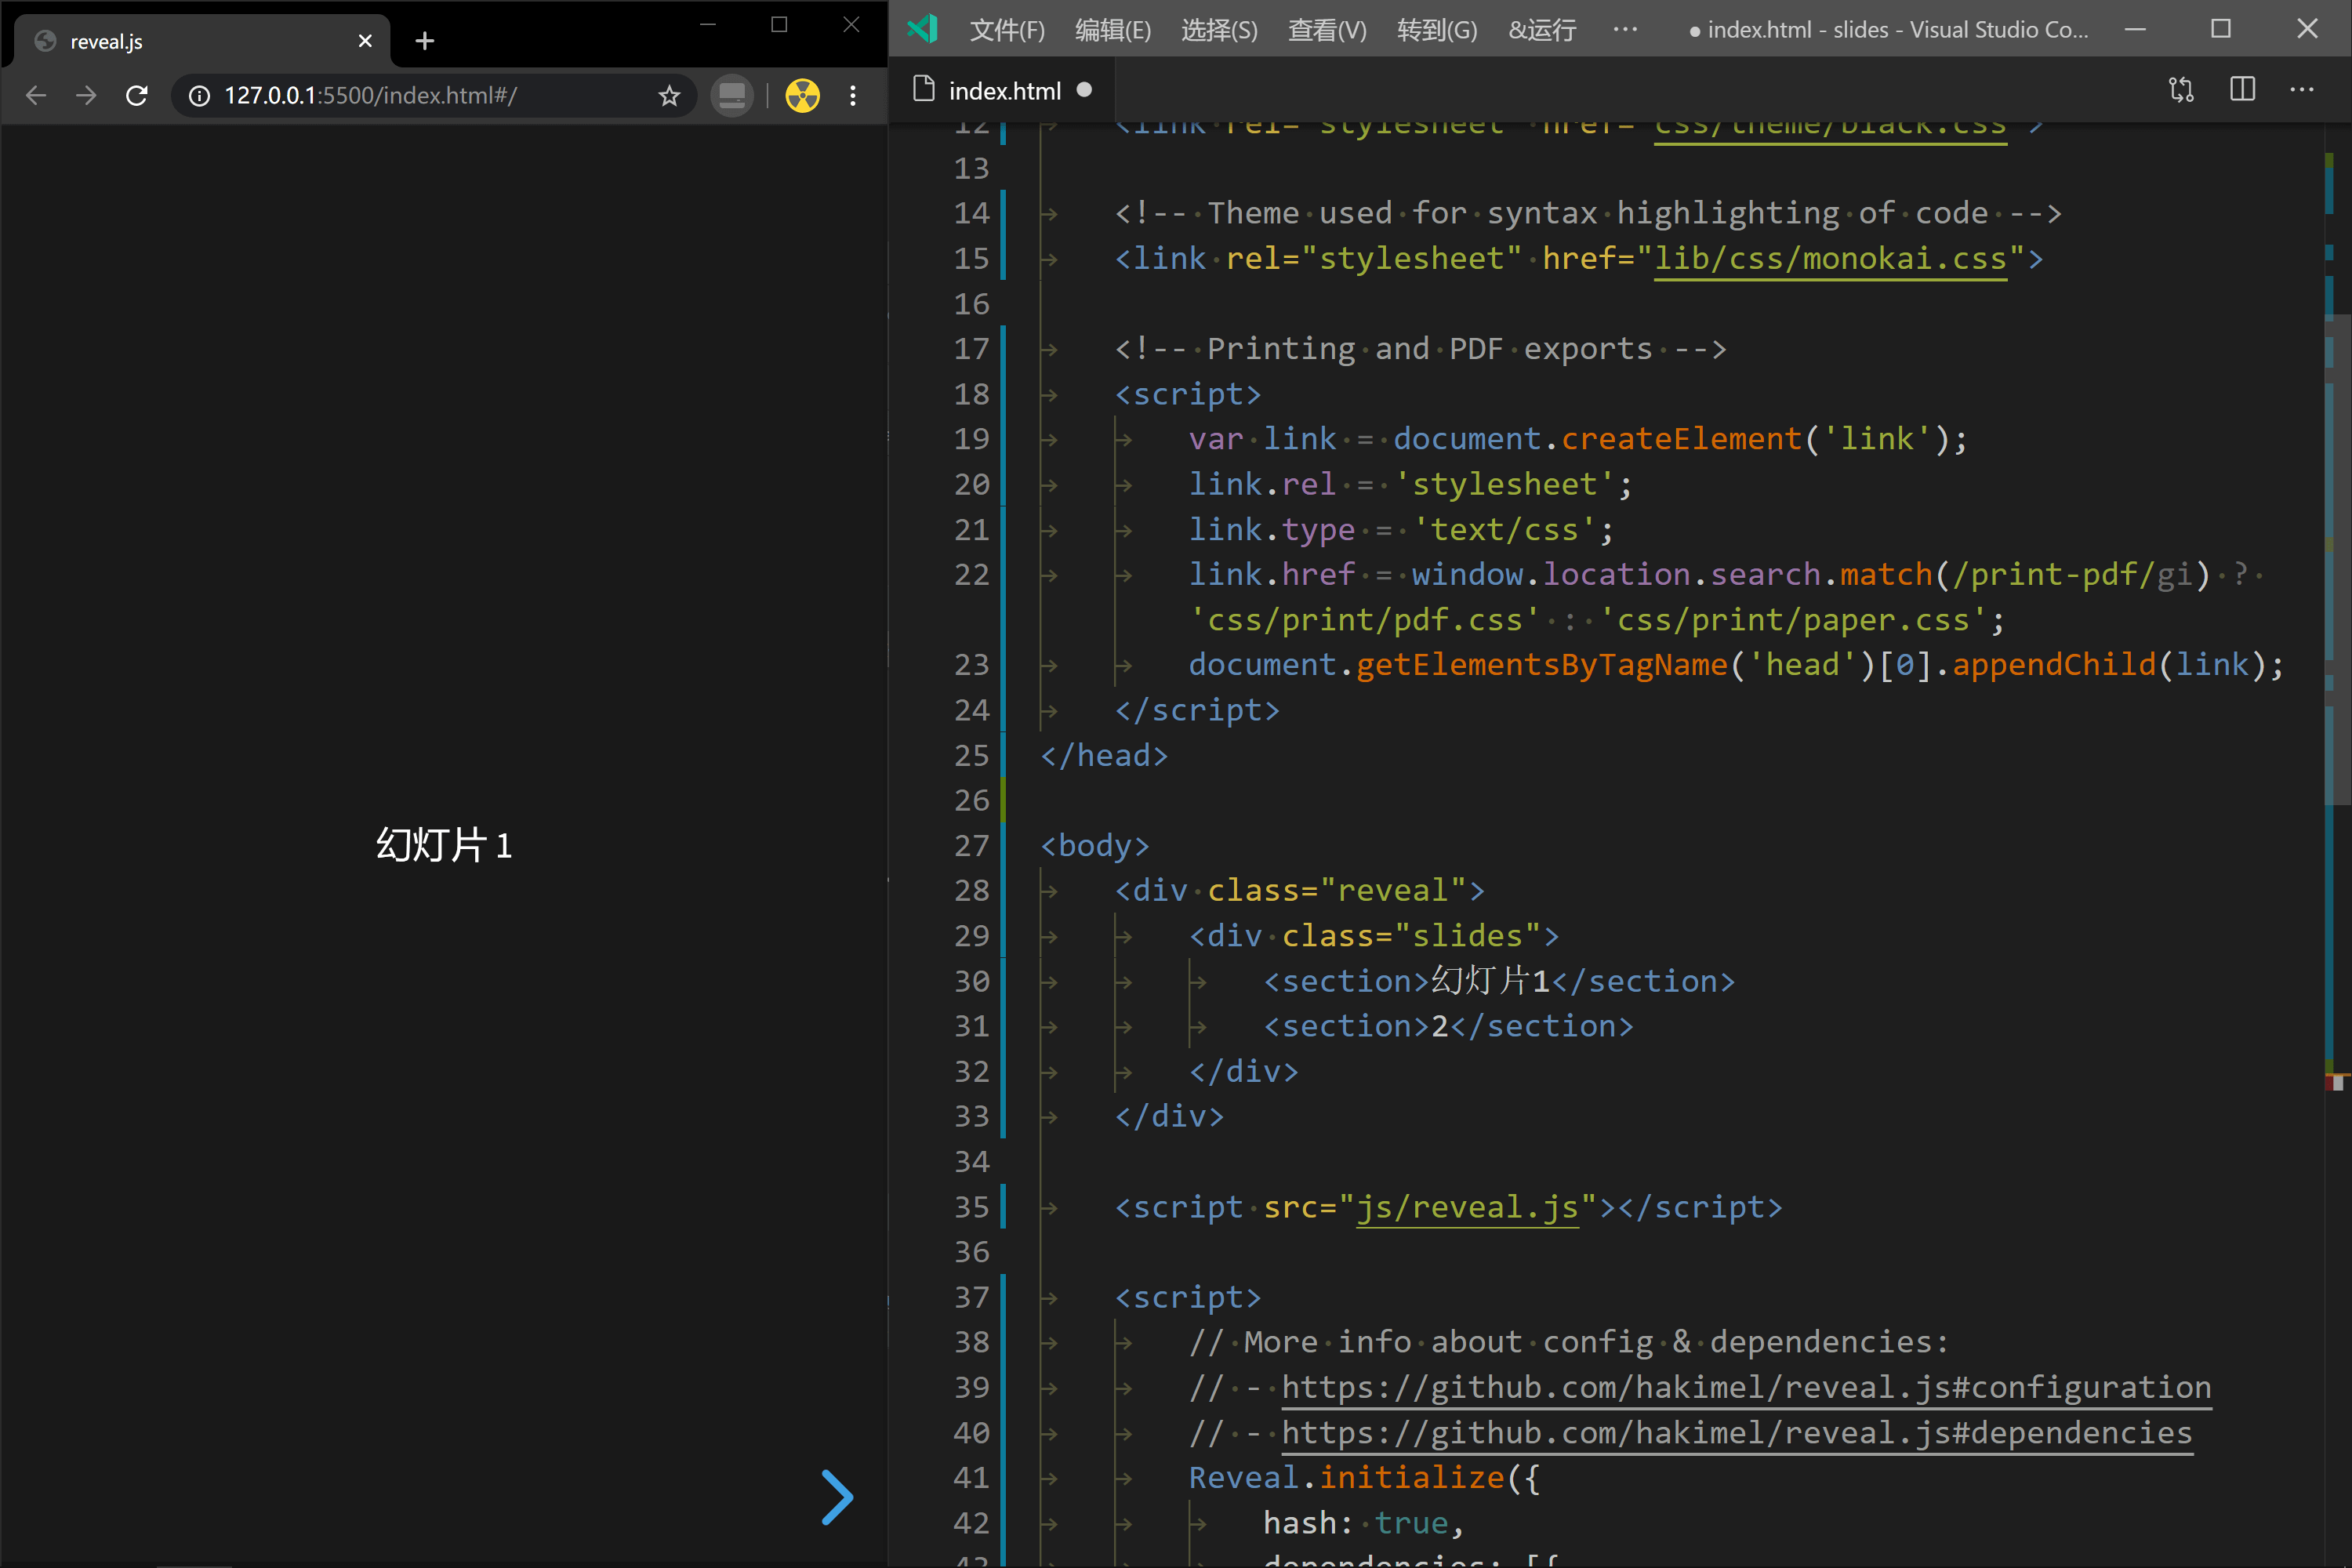 Visual Studio Code with Live Server